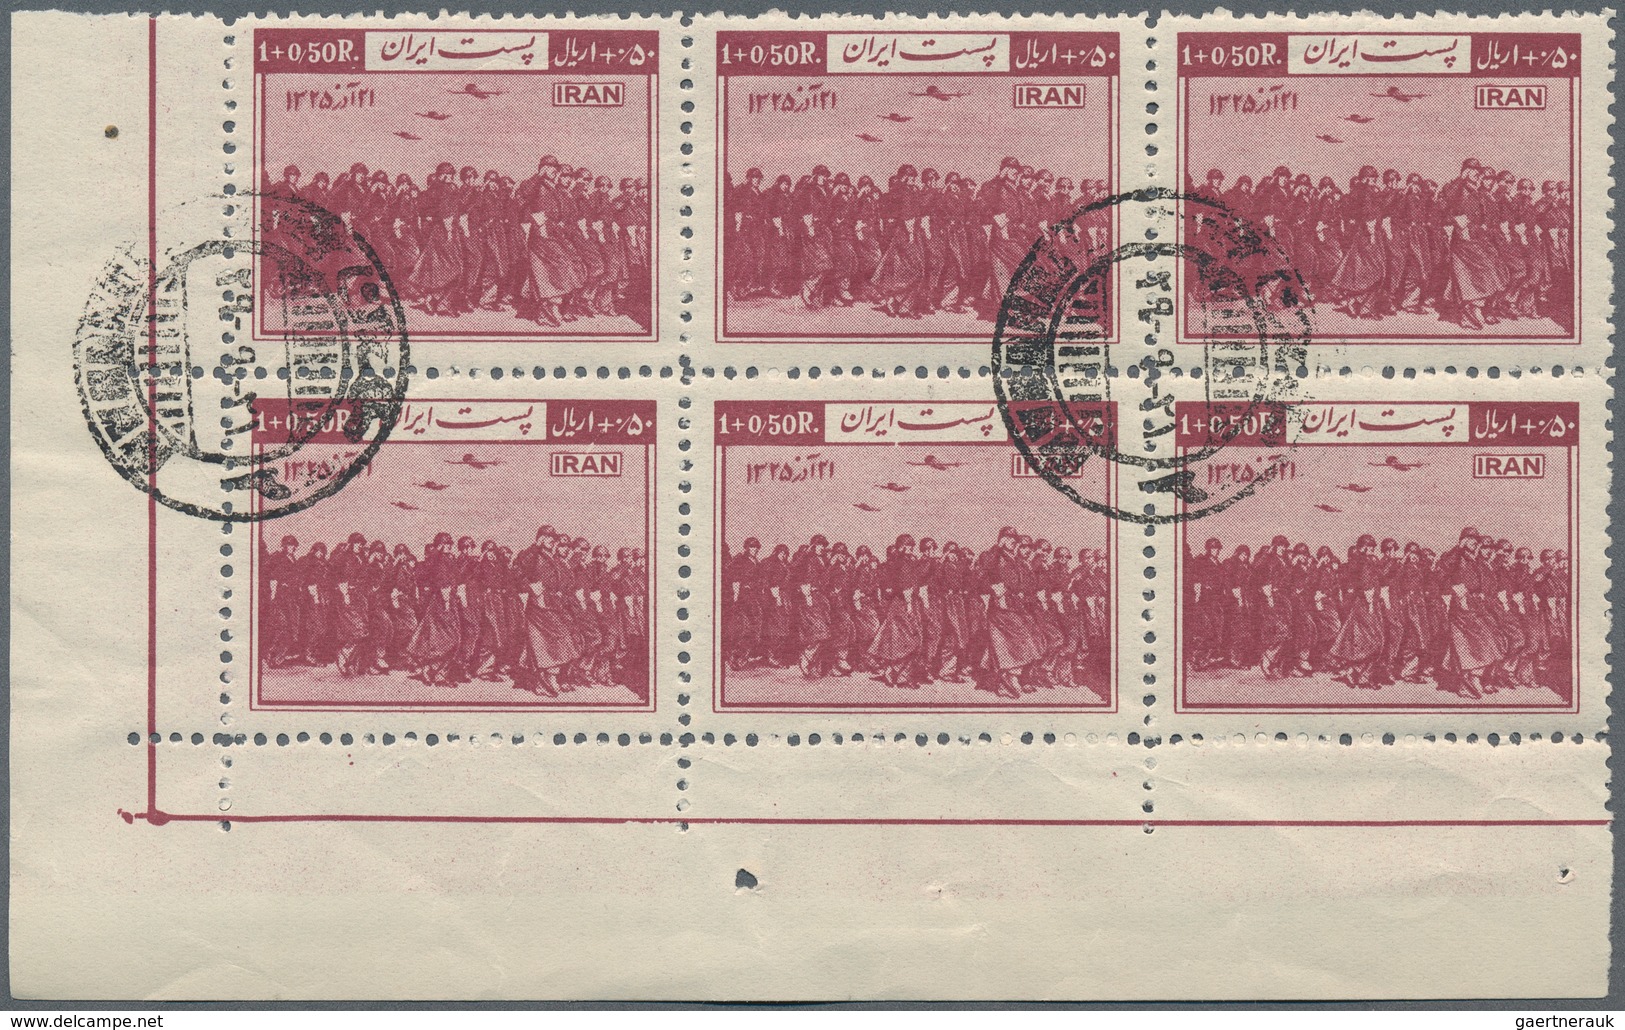 08948 Iran: 1950, set of six values in corner margin blocks of six, fine cancelled, a scarce offer